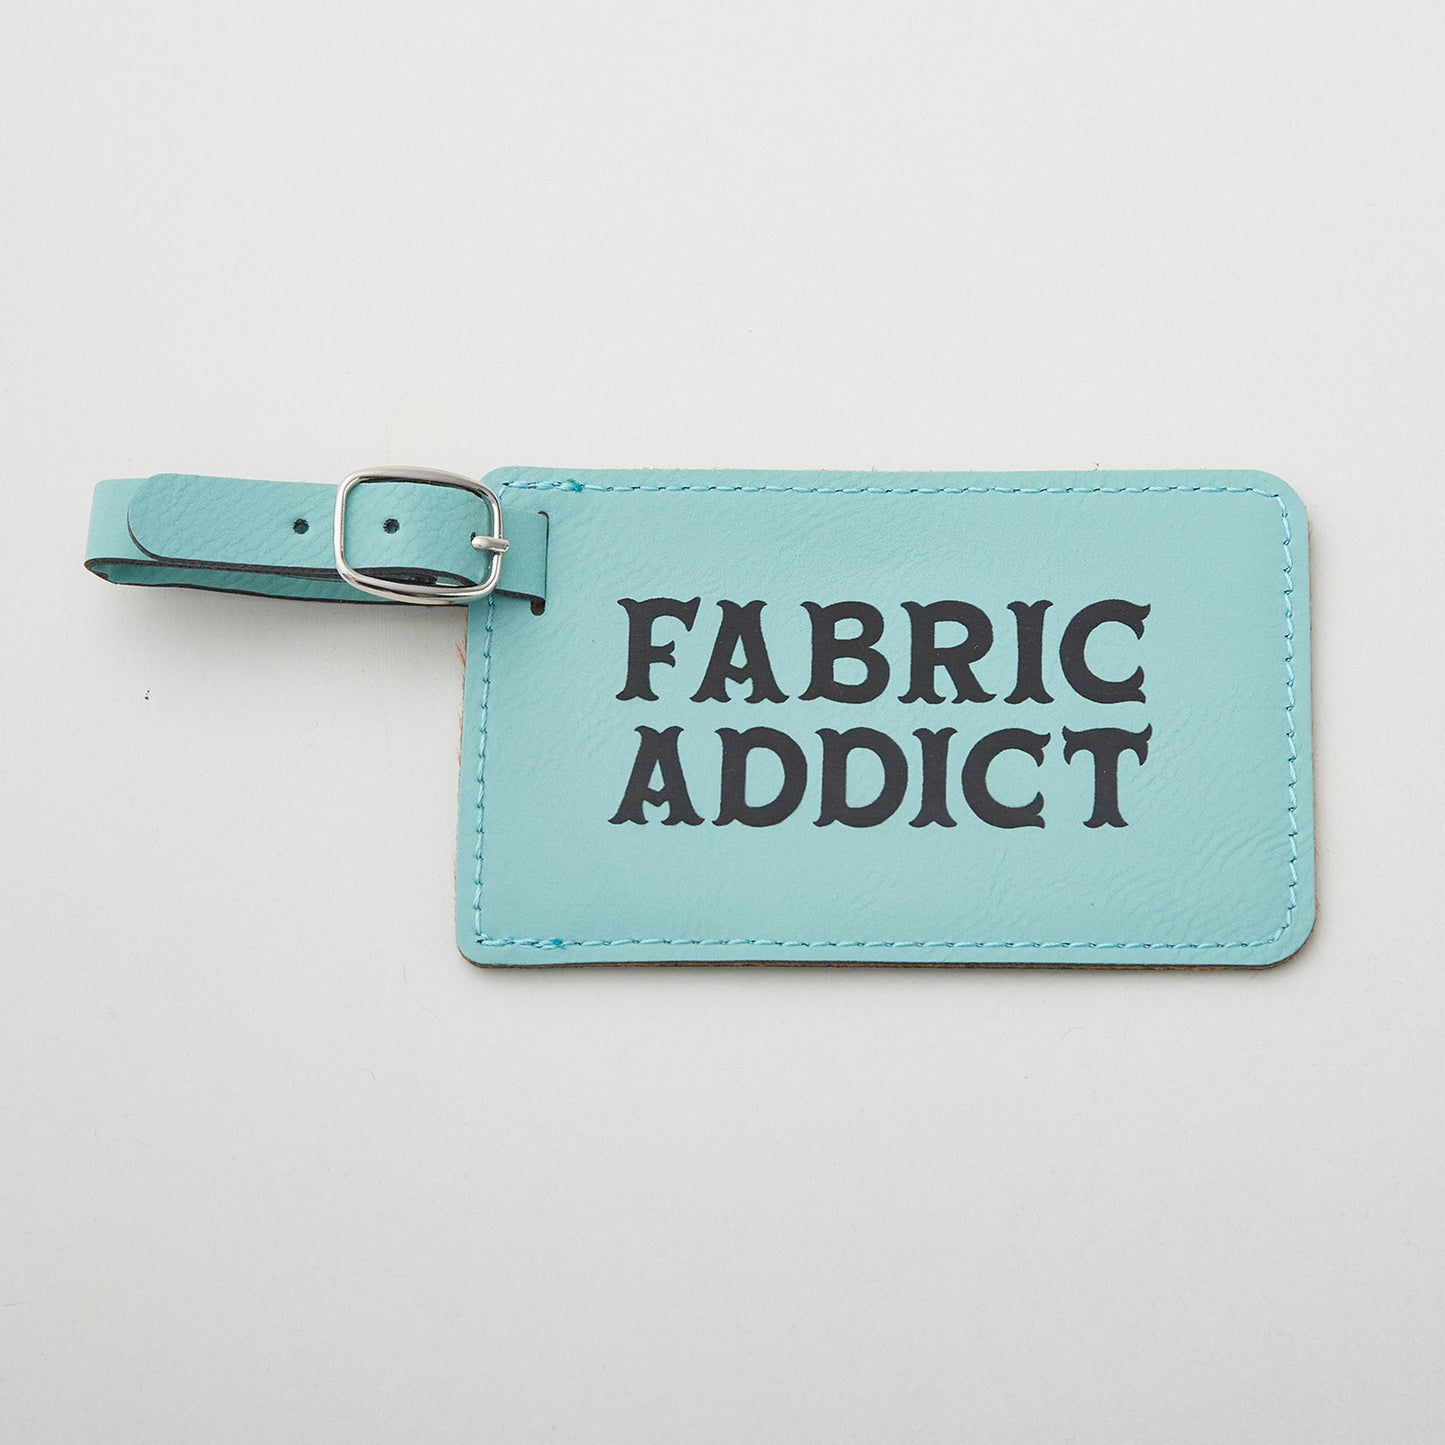 Fabric Addict Luggage Tag Primary Image